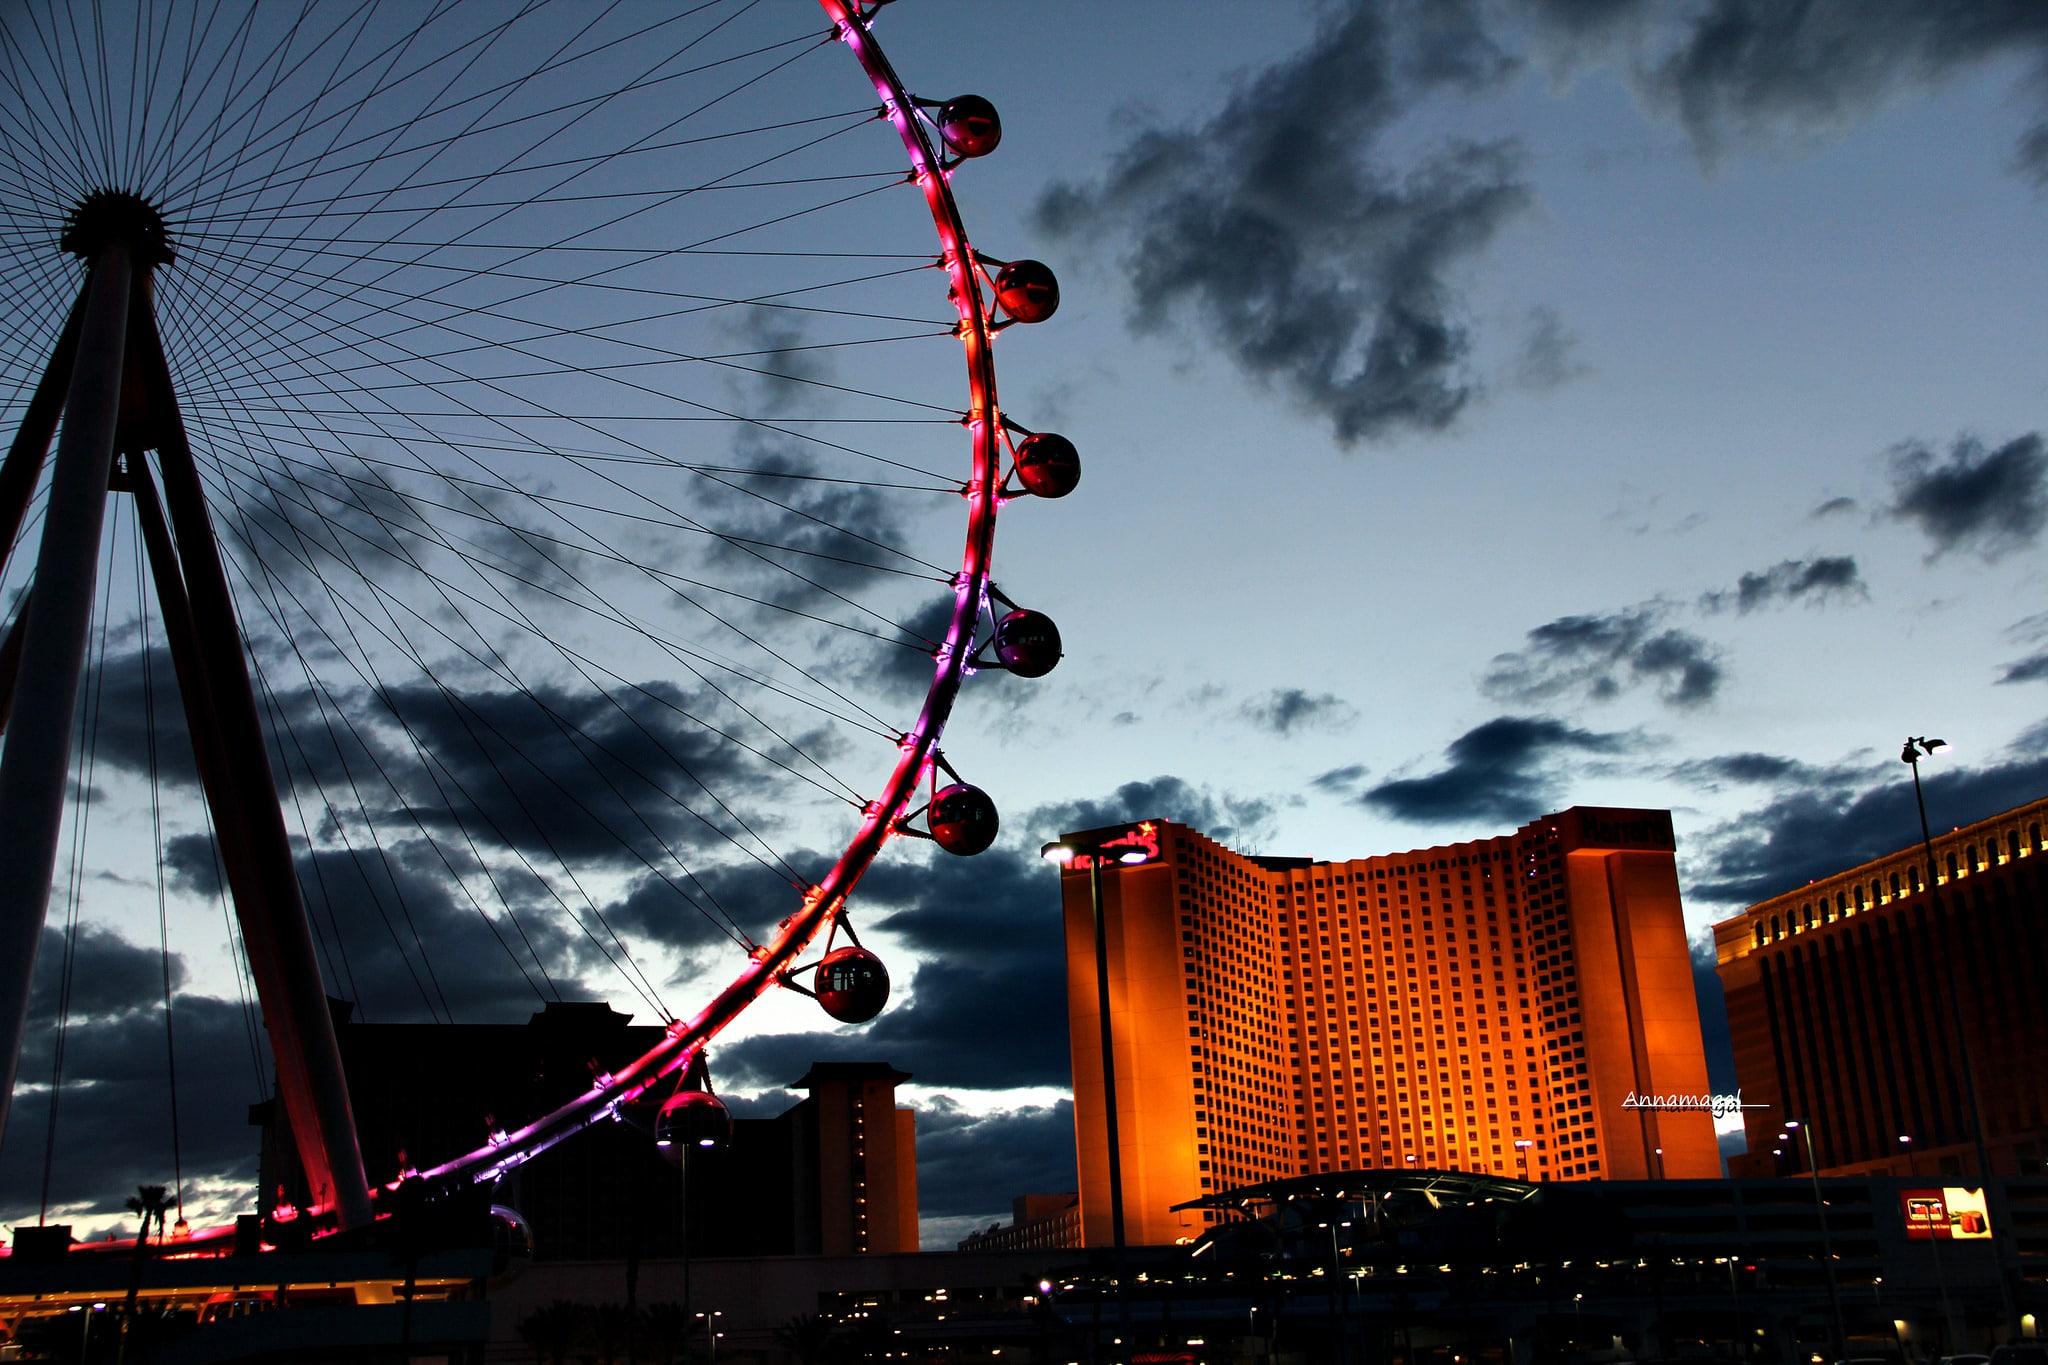 Las Vegas, The Linq, High Roller